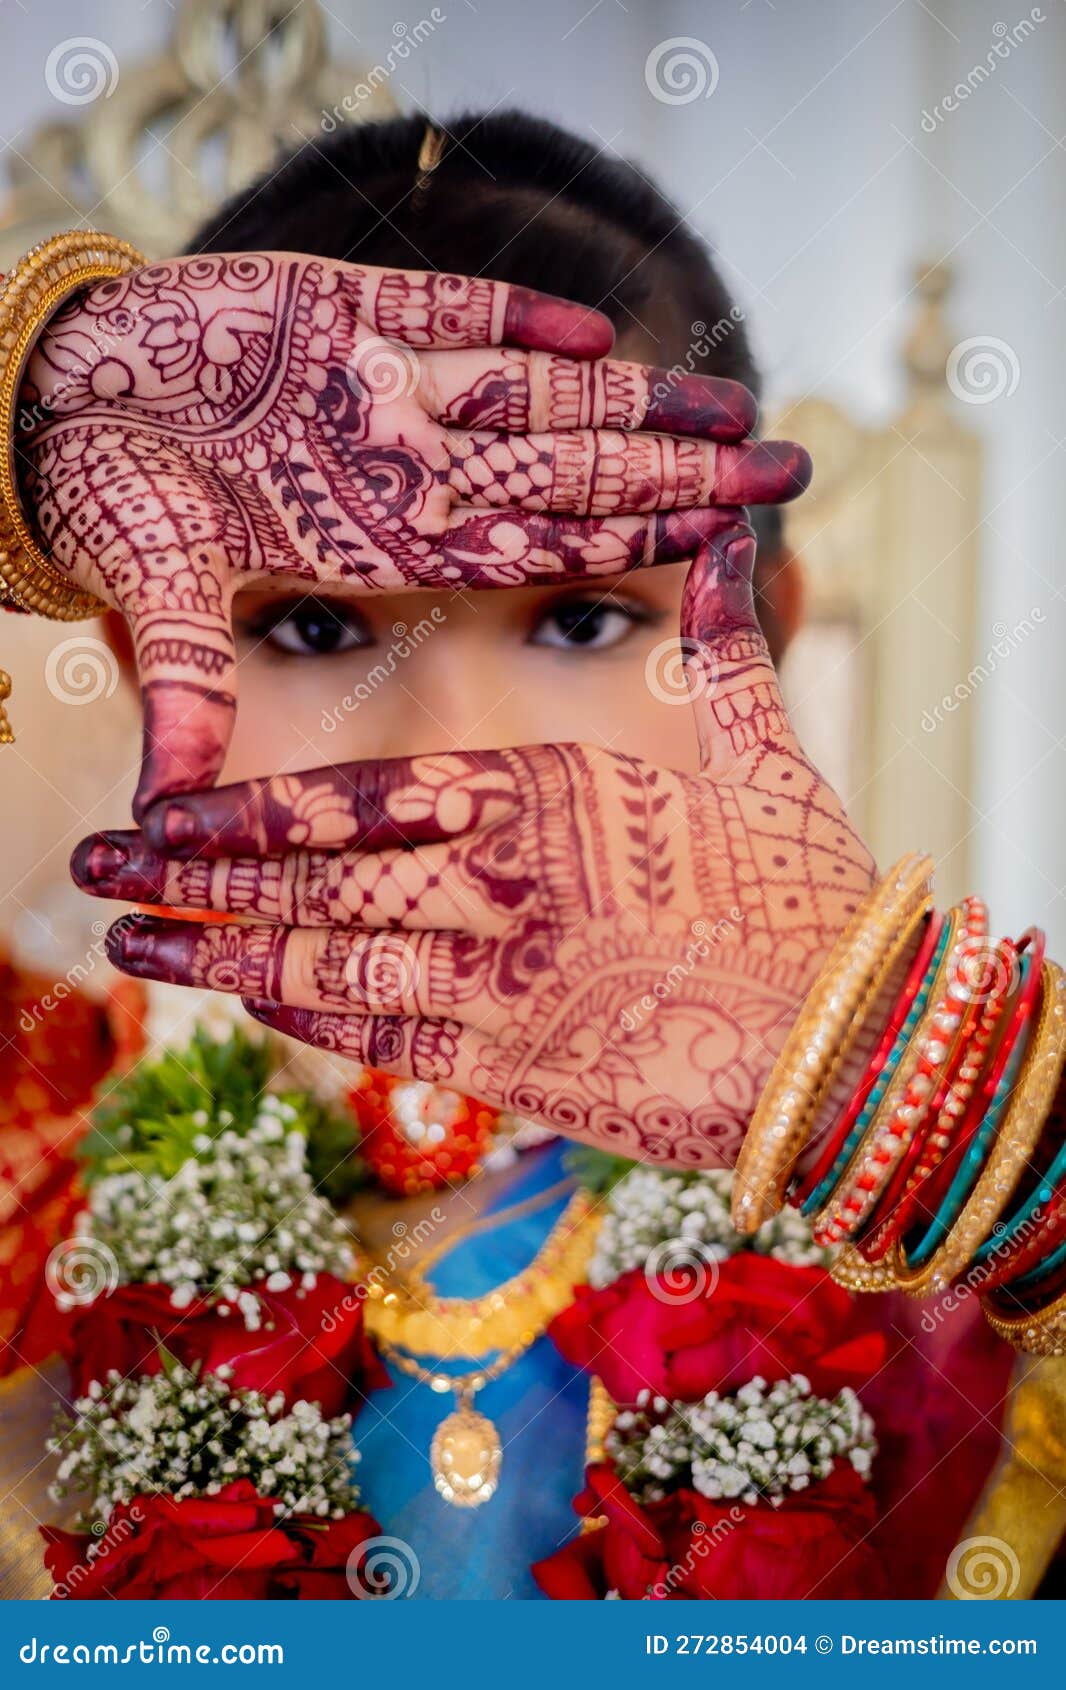 Indian Wedding Ideas Blog - Indian Wedding Themes, Indian Wedding Ideas |  Indian Wedding Planning Tool